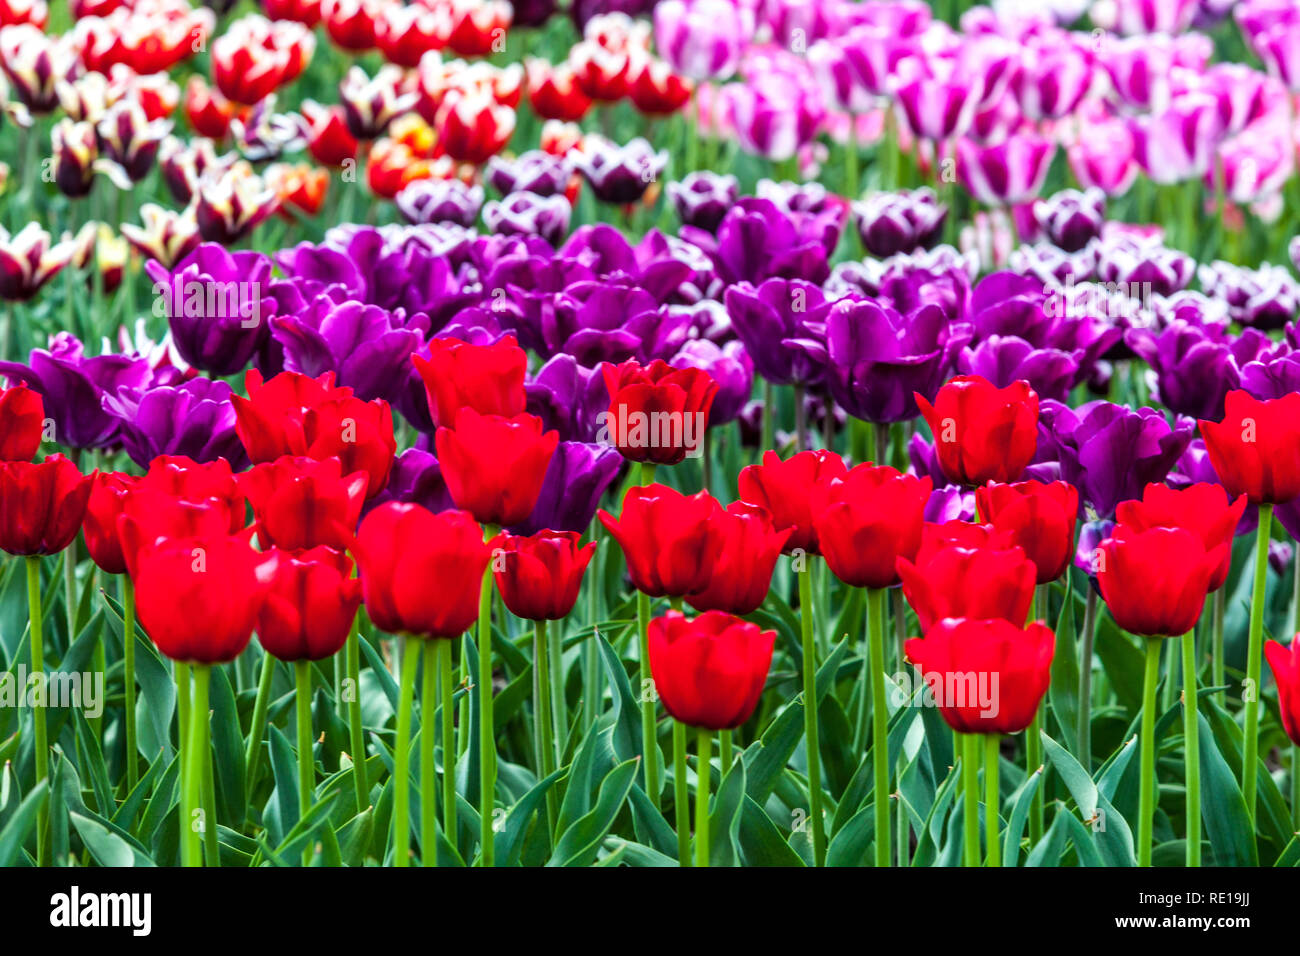 Blumenbeete farbenfroher Garten, Frühlingsblumen, rote Tulpen Garten Blumenbeet Grenze, kontrastierende Blumen Stockfoto